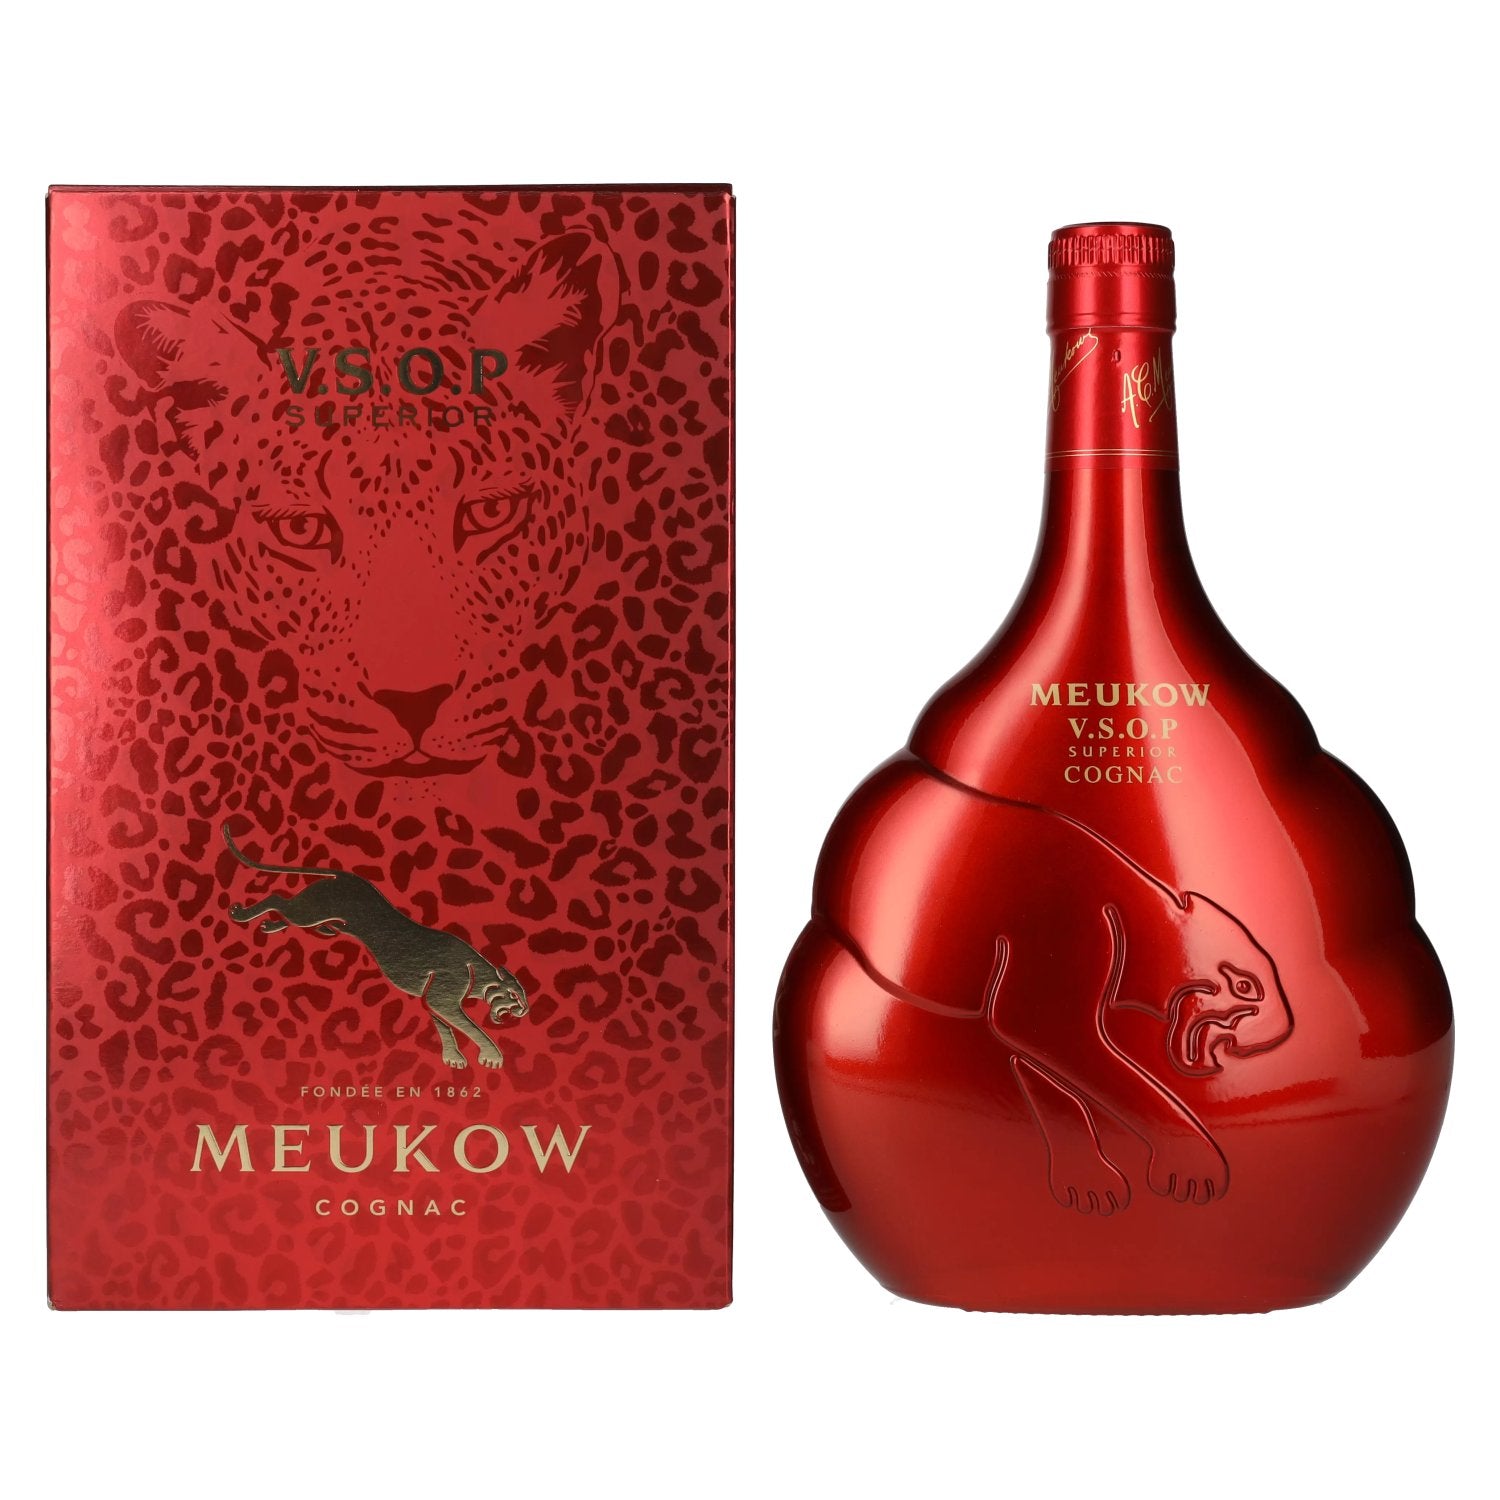 Meukow VSOP Cognac Red Edition